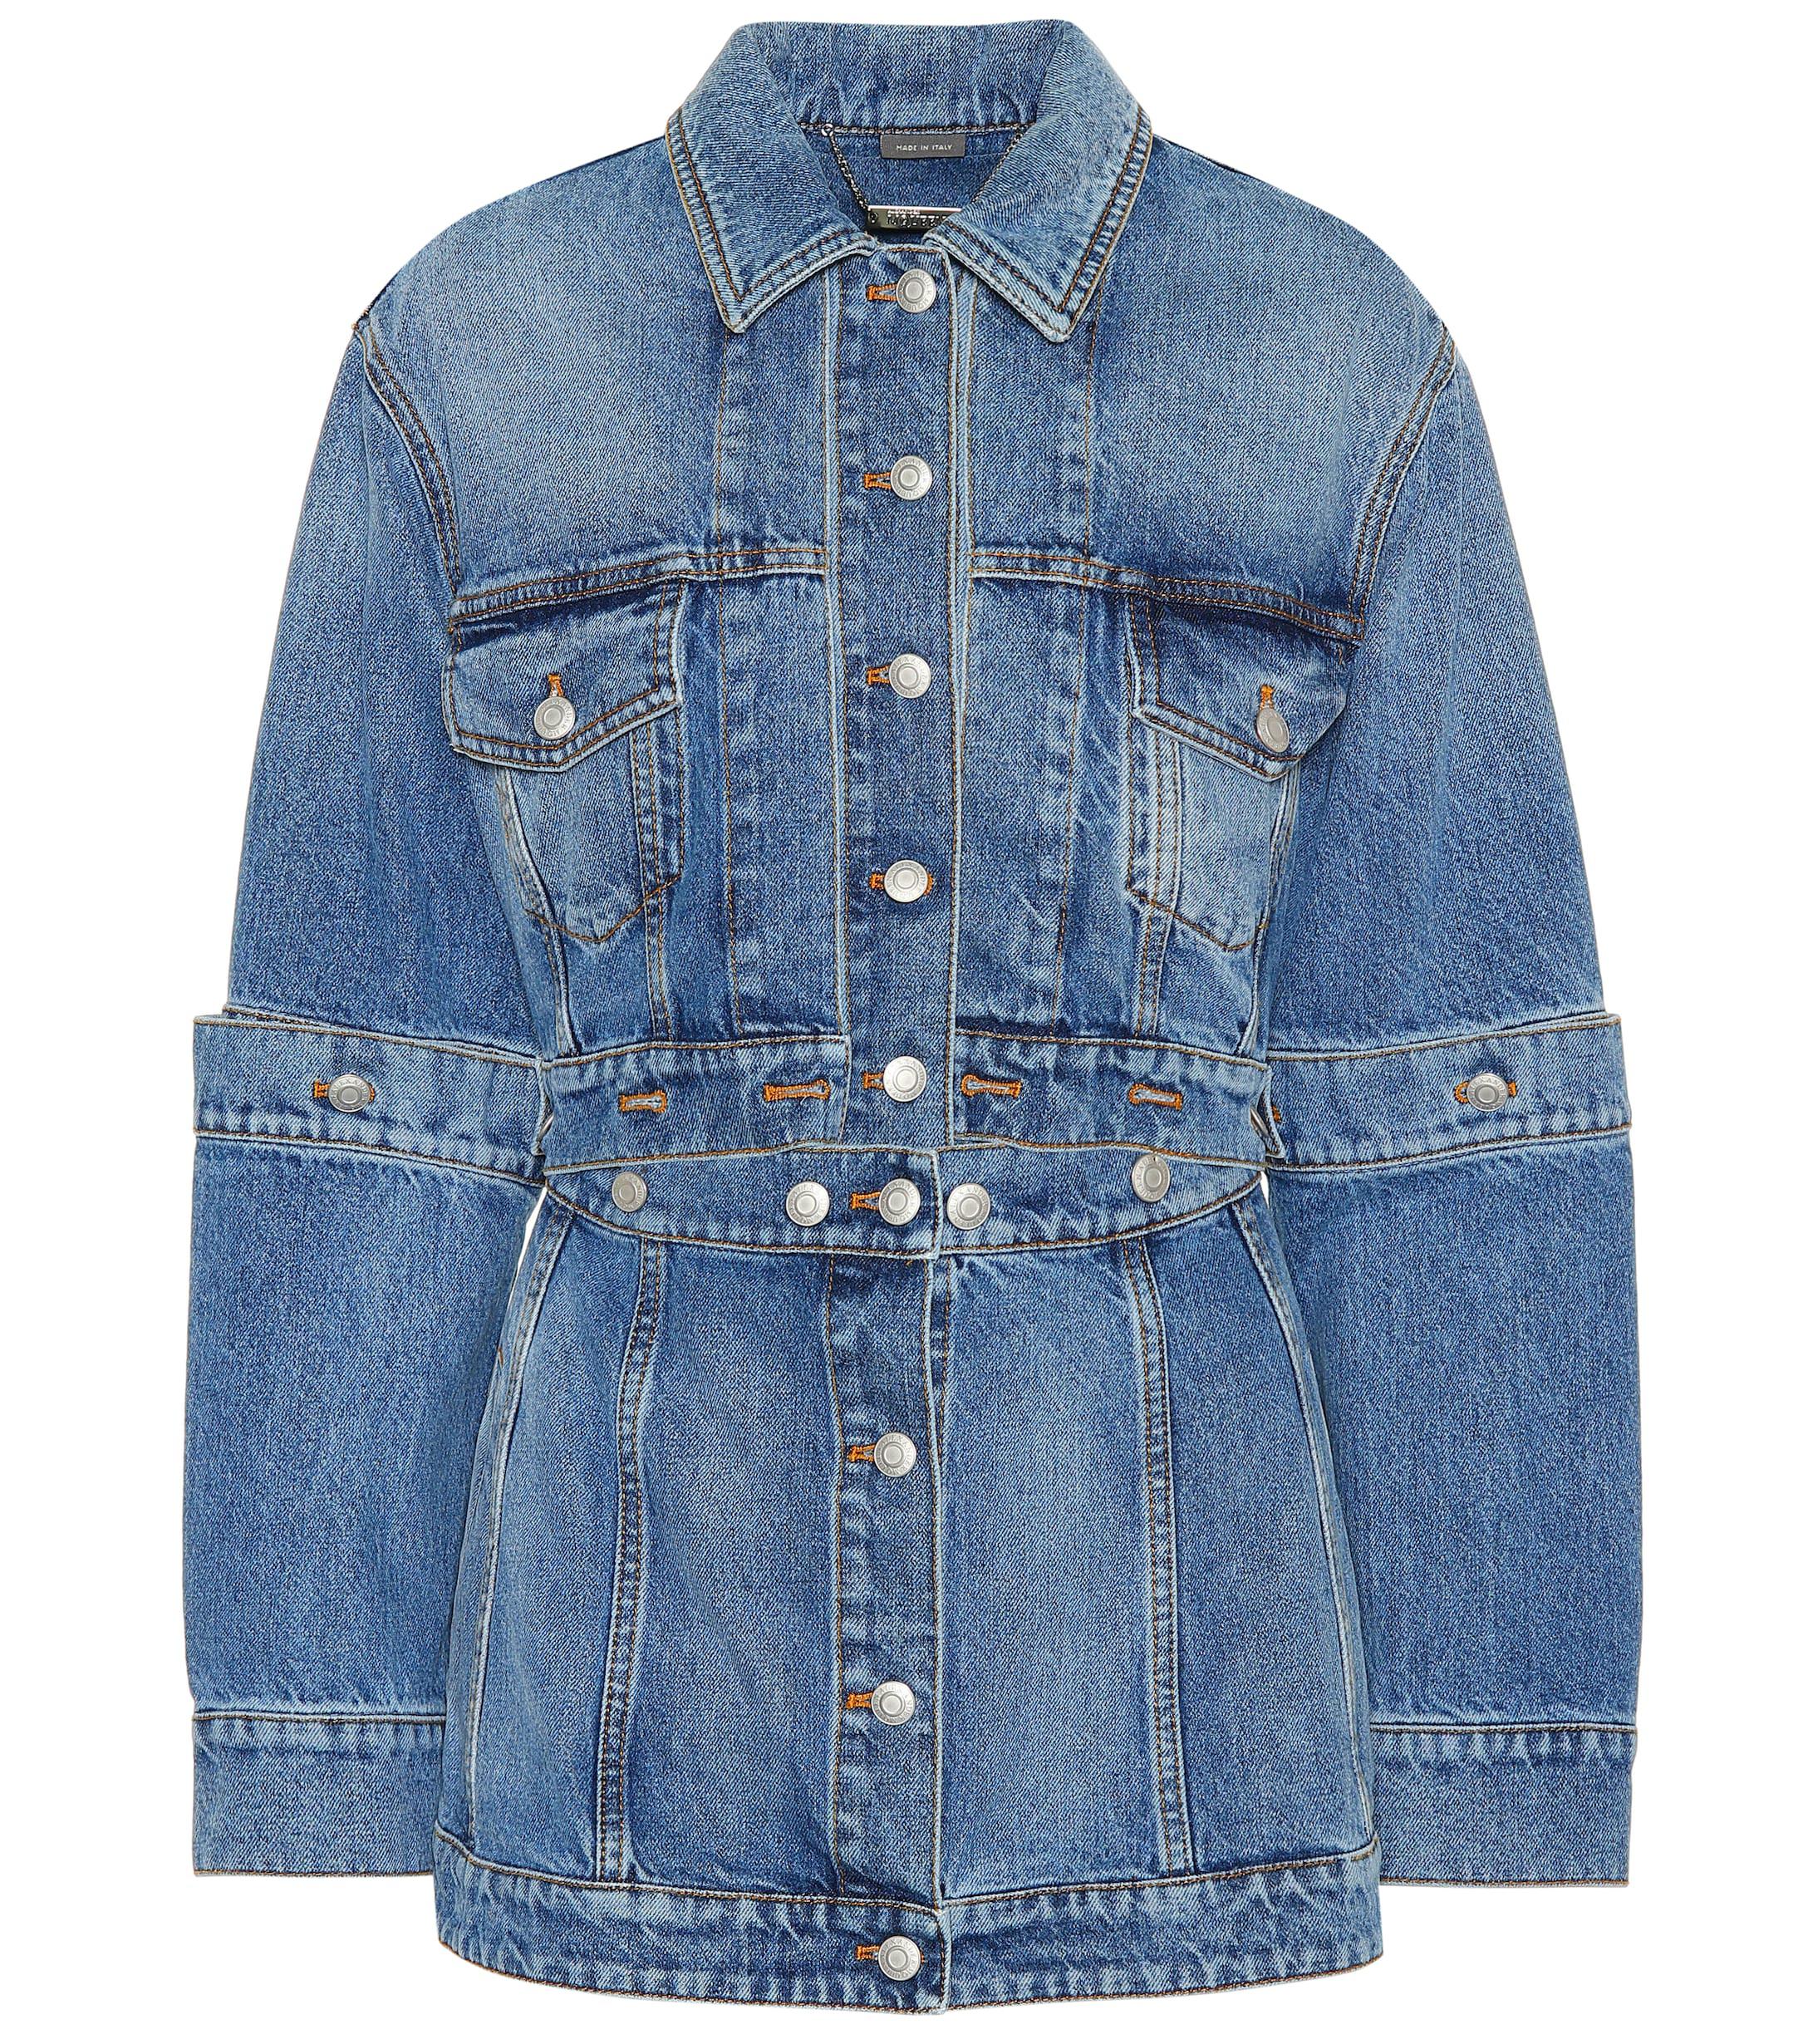 Alexander McQueen Deconstructed Denim Jacket in Vintage Wash (Blue) - Lyst